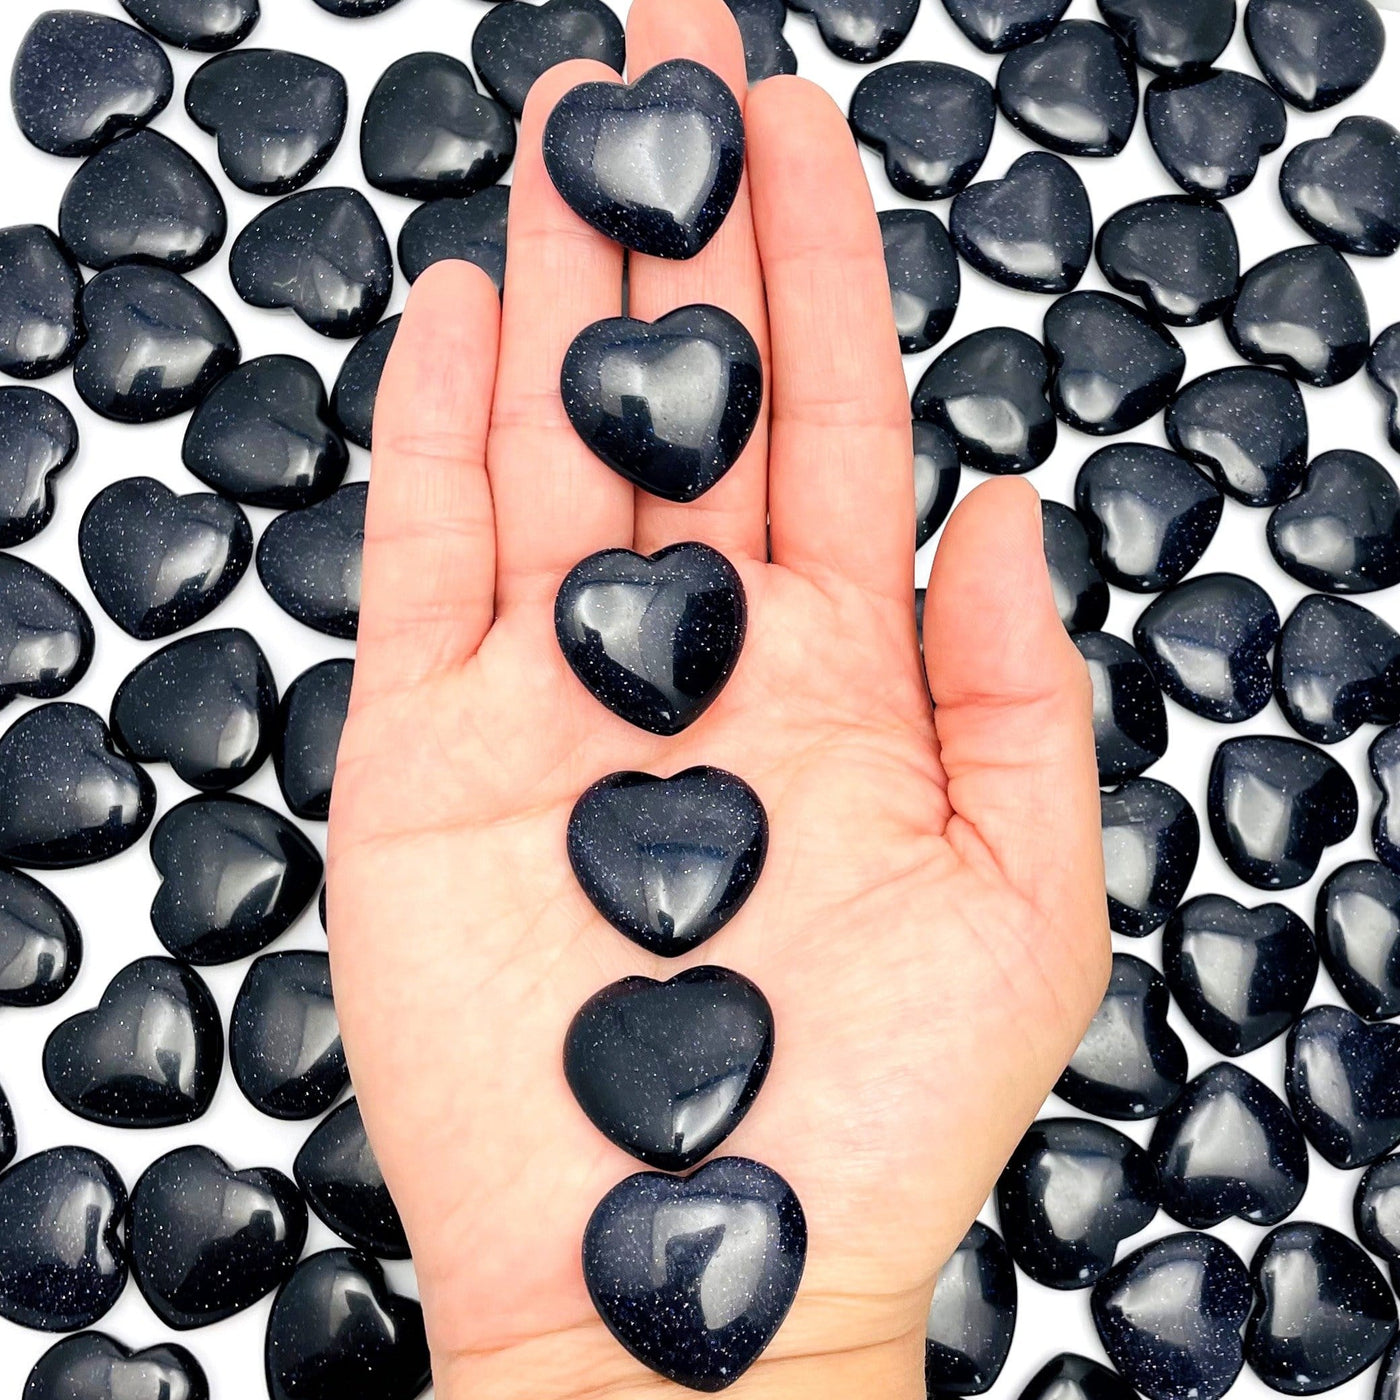 Dark Blue Goldstone Hearts in Hand on Multiple Dark Blue Goldstone Hearts Background.